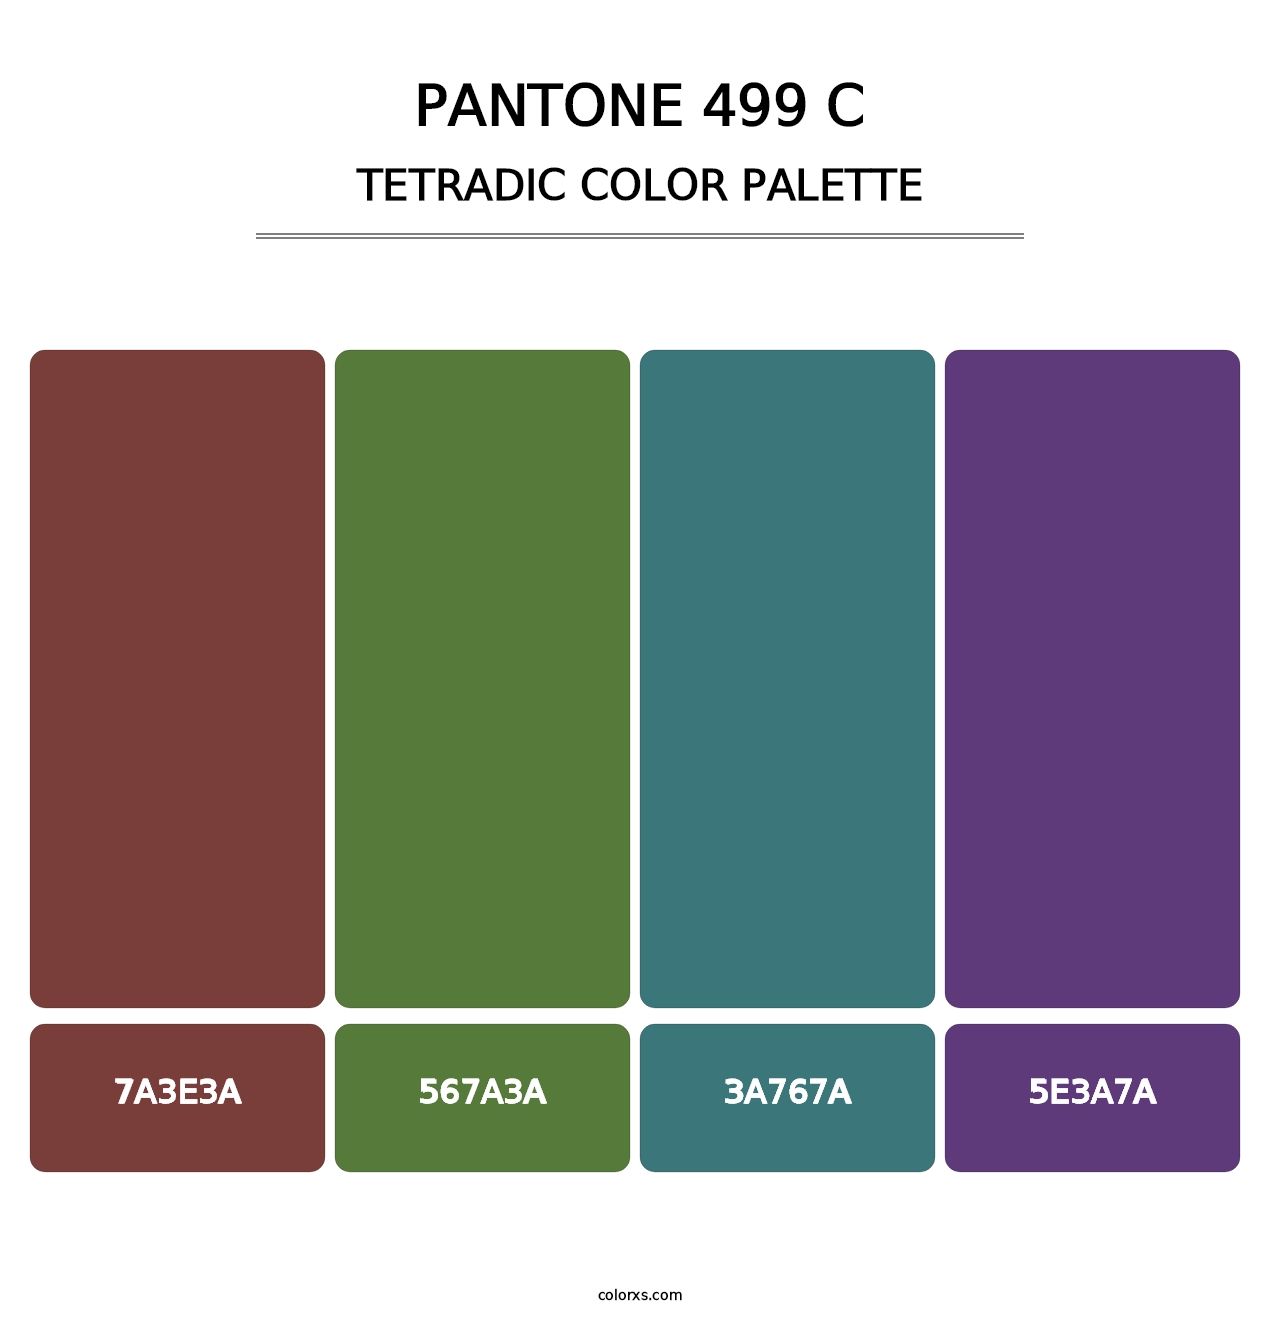 PANTONE 499 C - Tetradic Color Palette